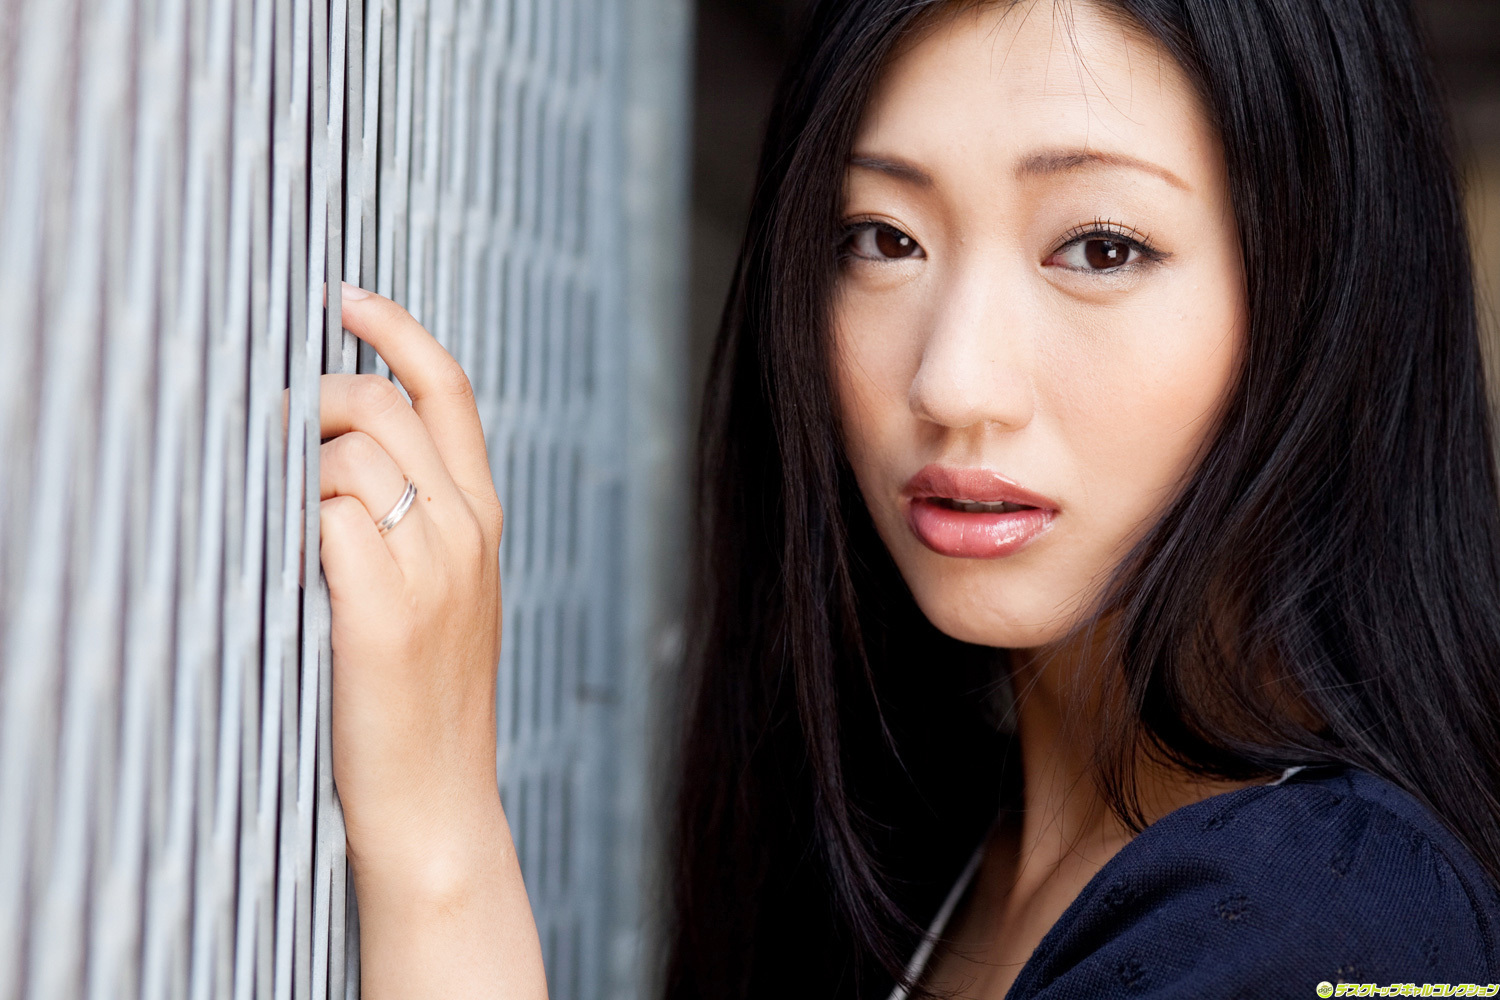 [DGC] January 2013 no.1065 tanmi danmitsu Japanese actress sexy pictures